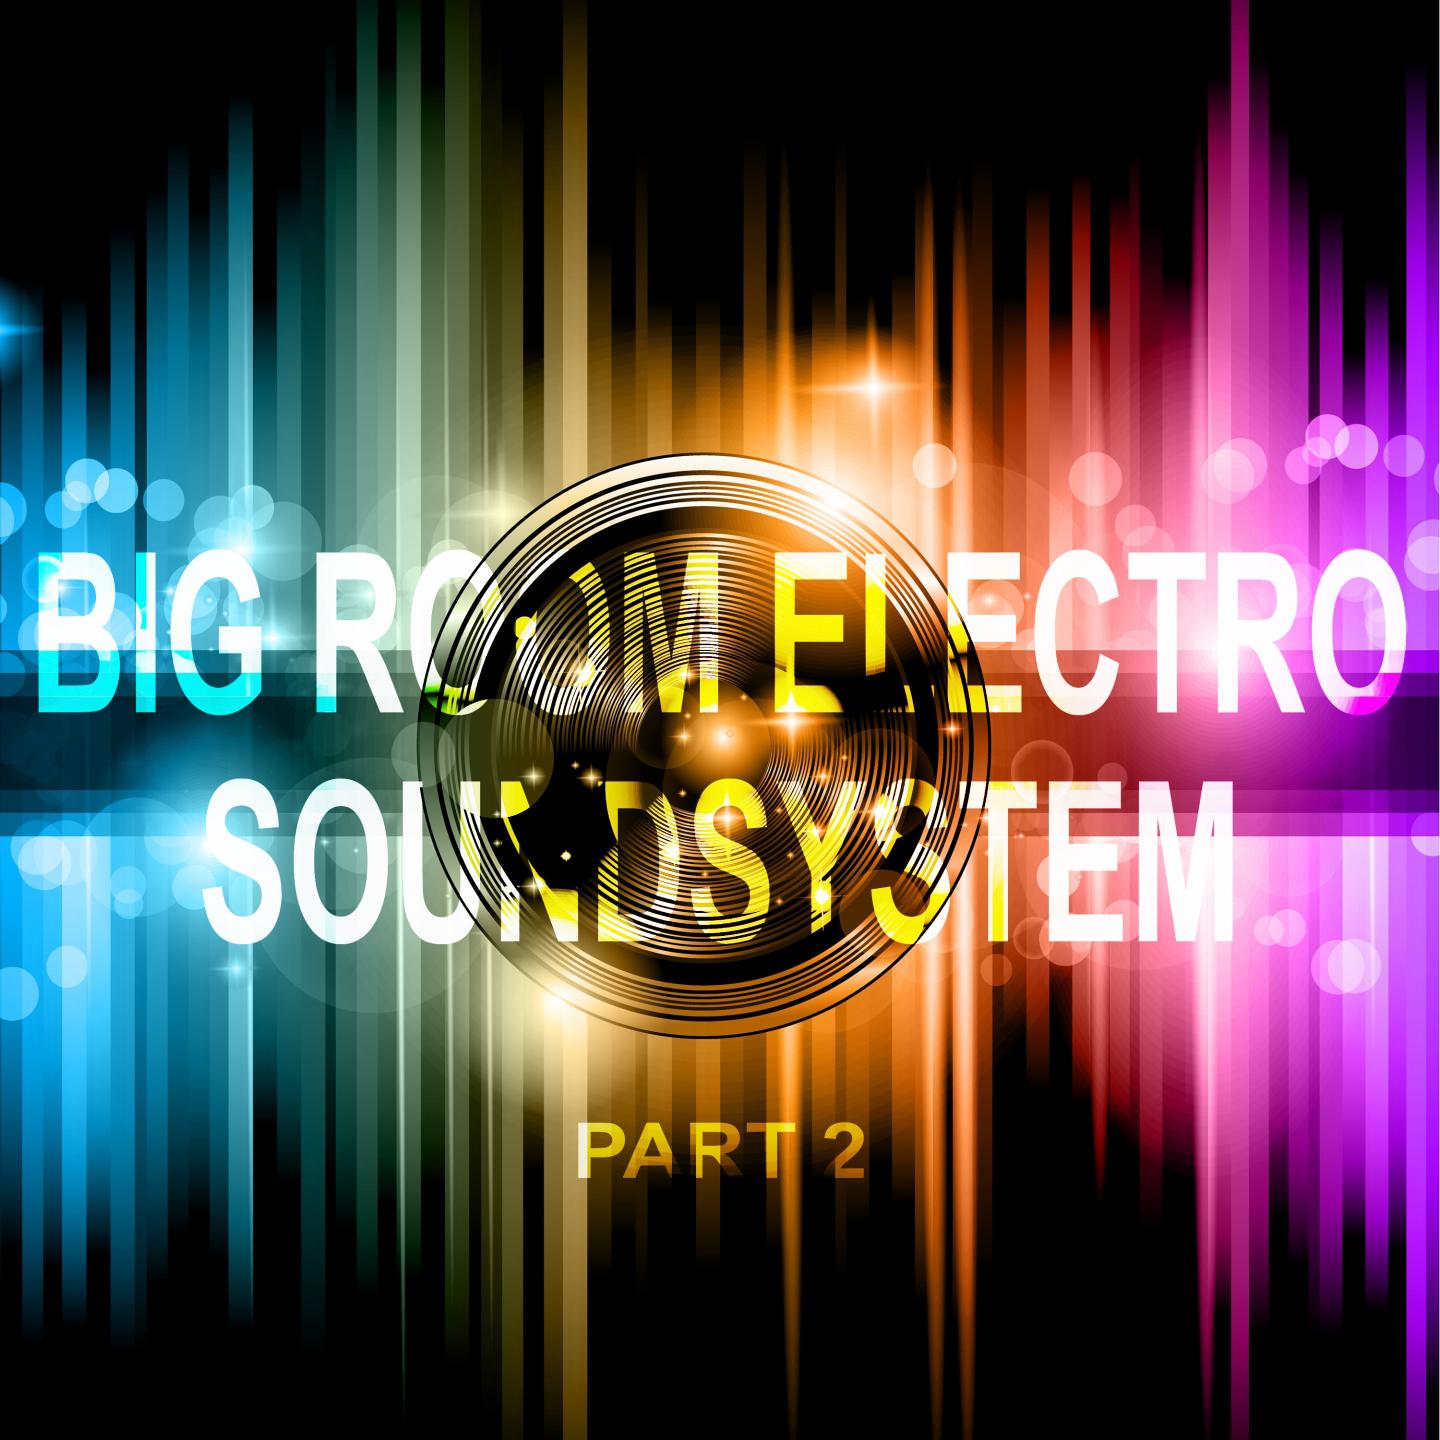 Big Room Electro Soundsystem Part 2